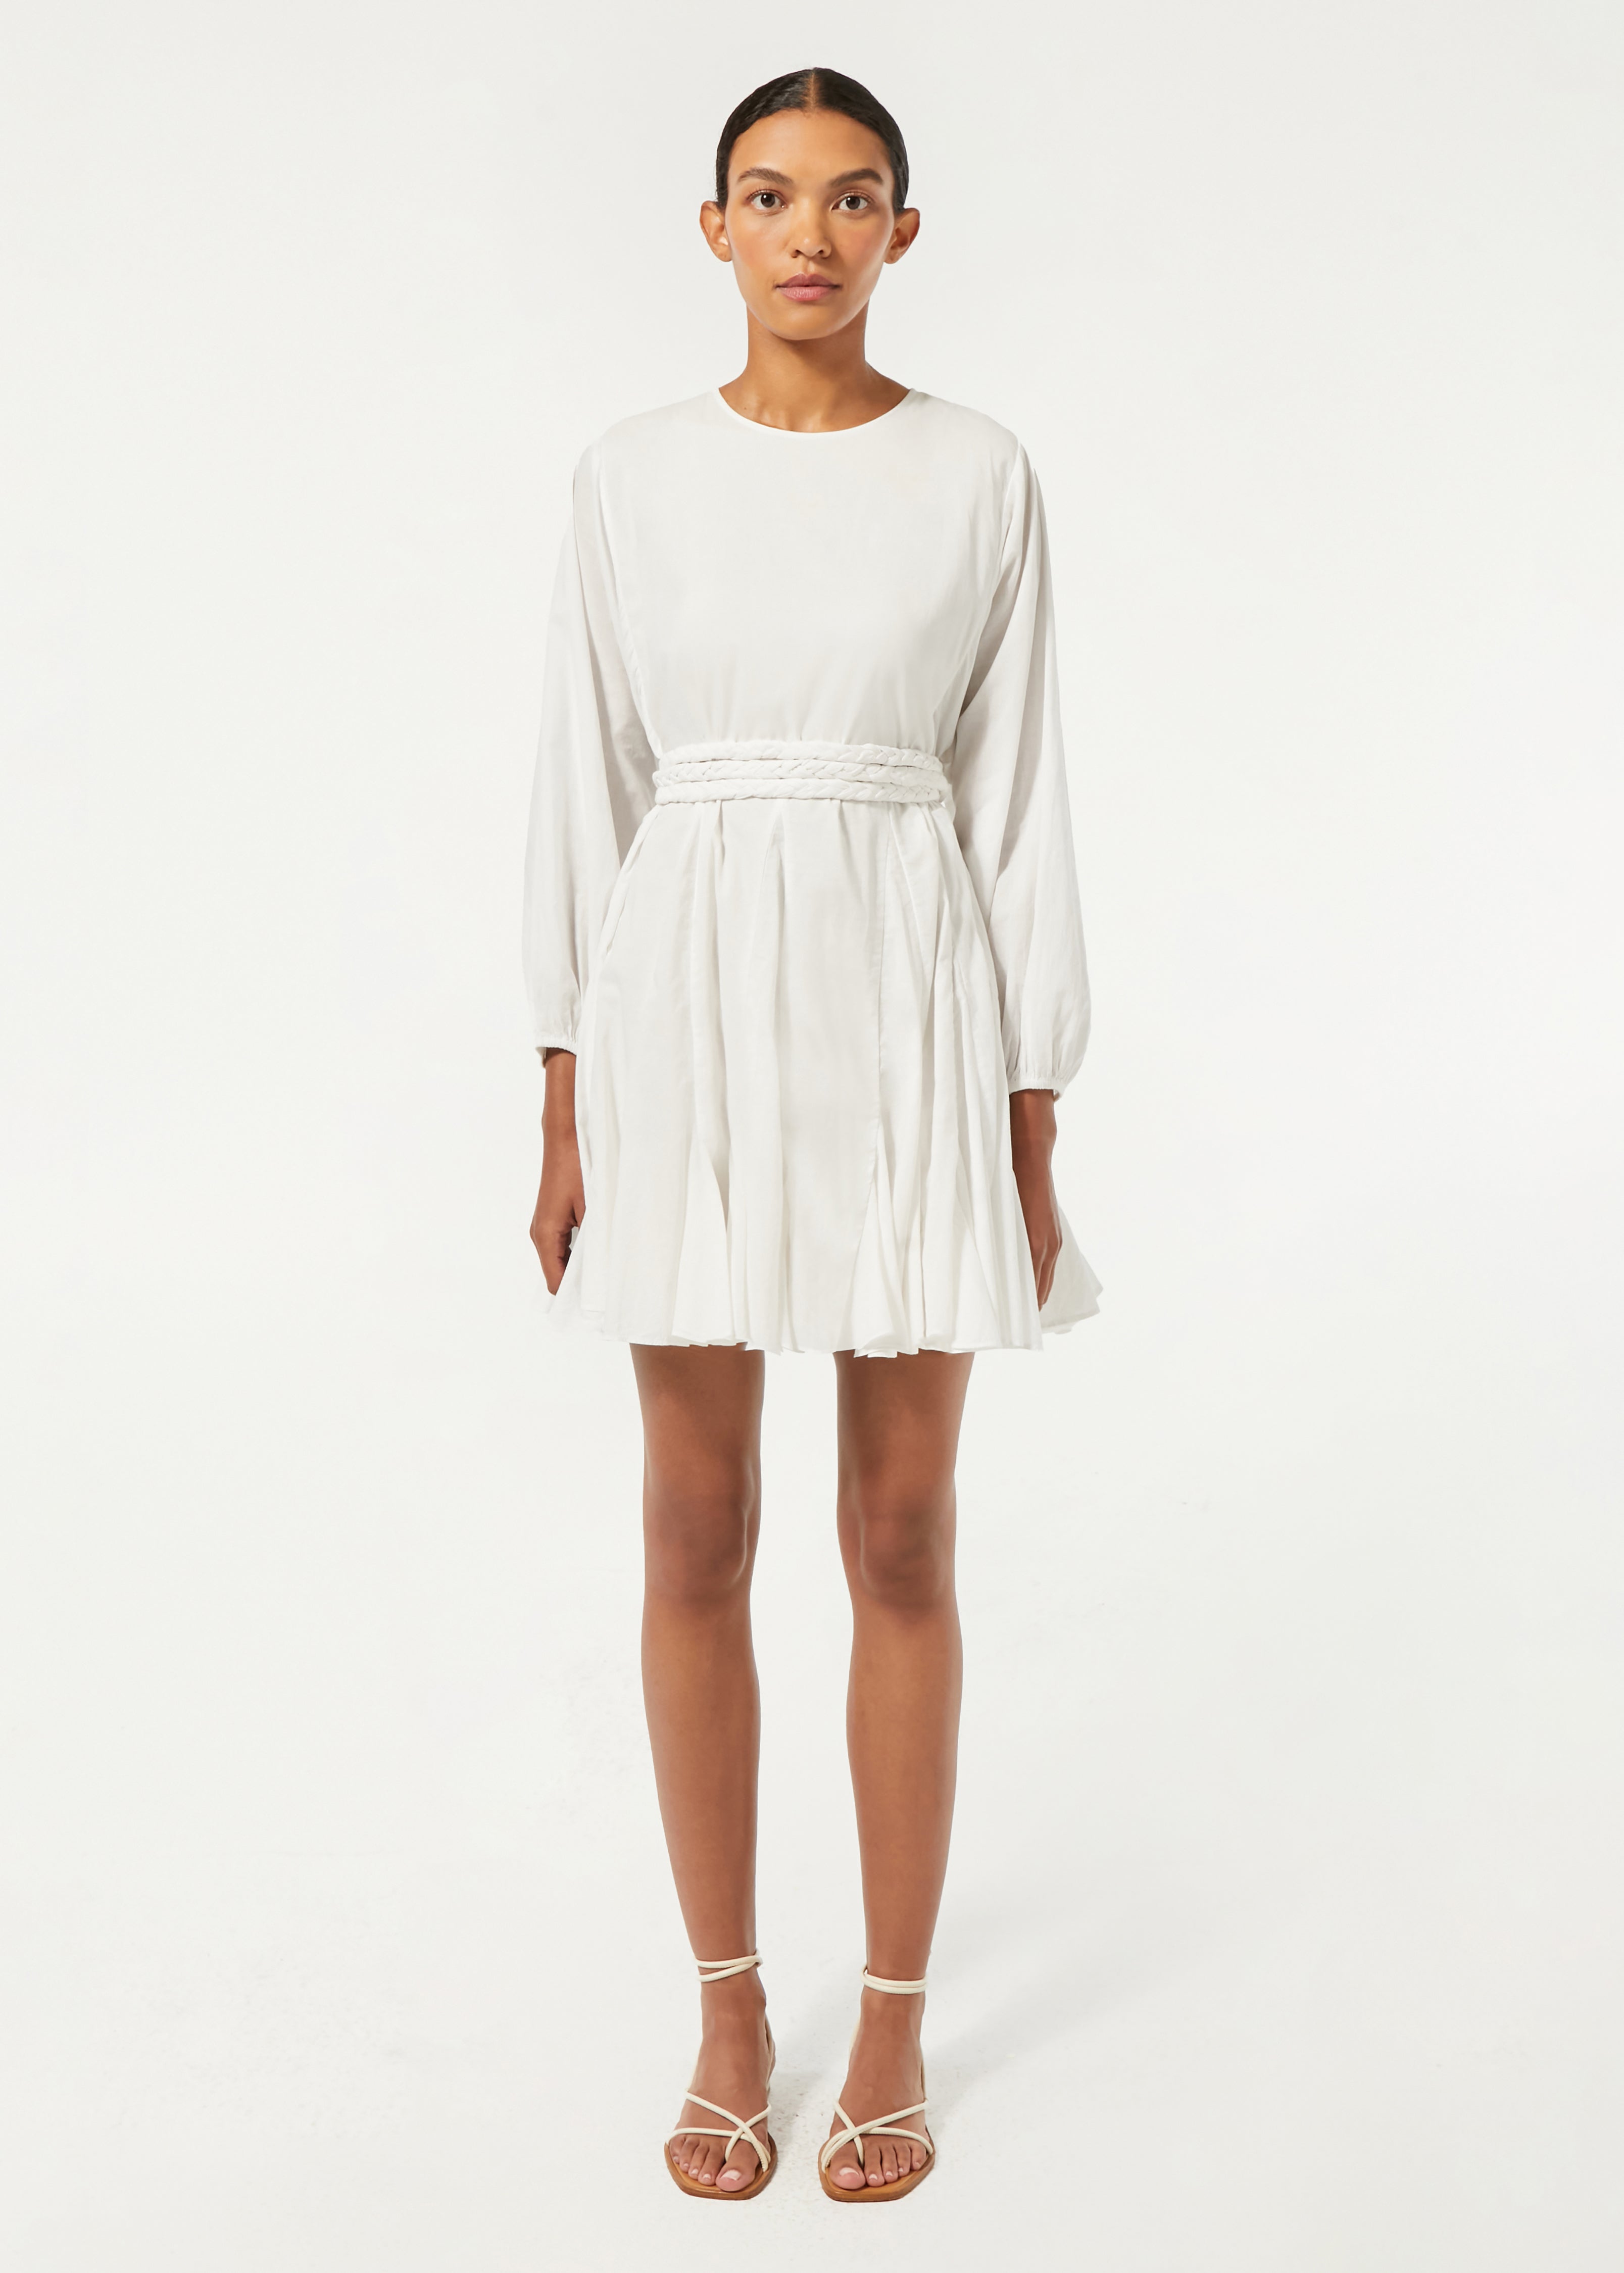 RHODE Ella Dress | White | Official Site